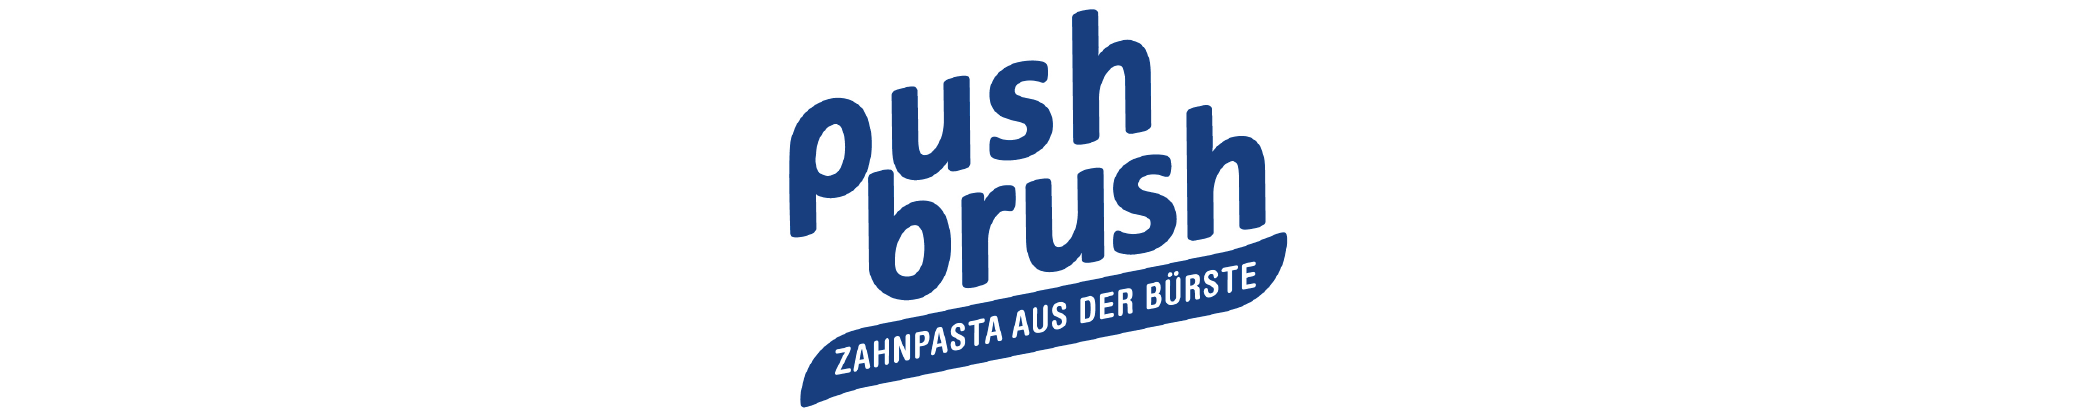 PUSHBRUSH